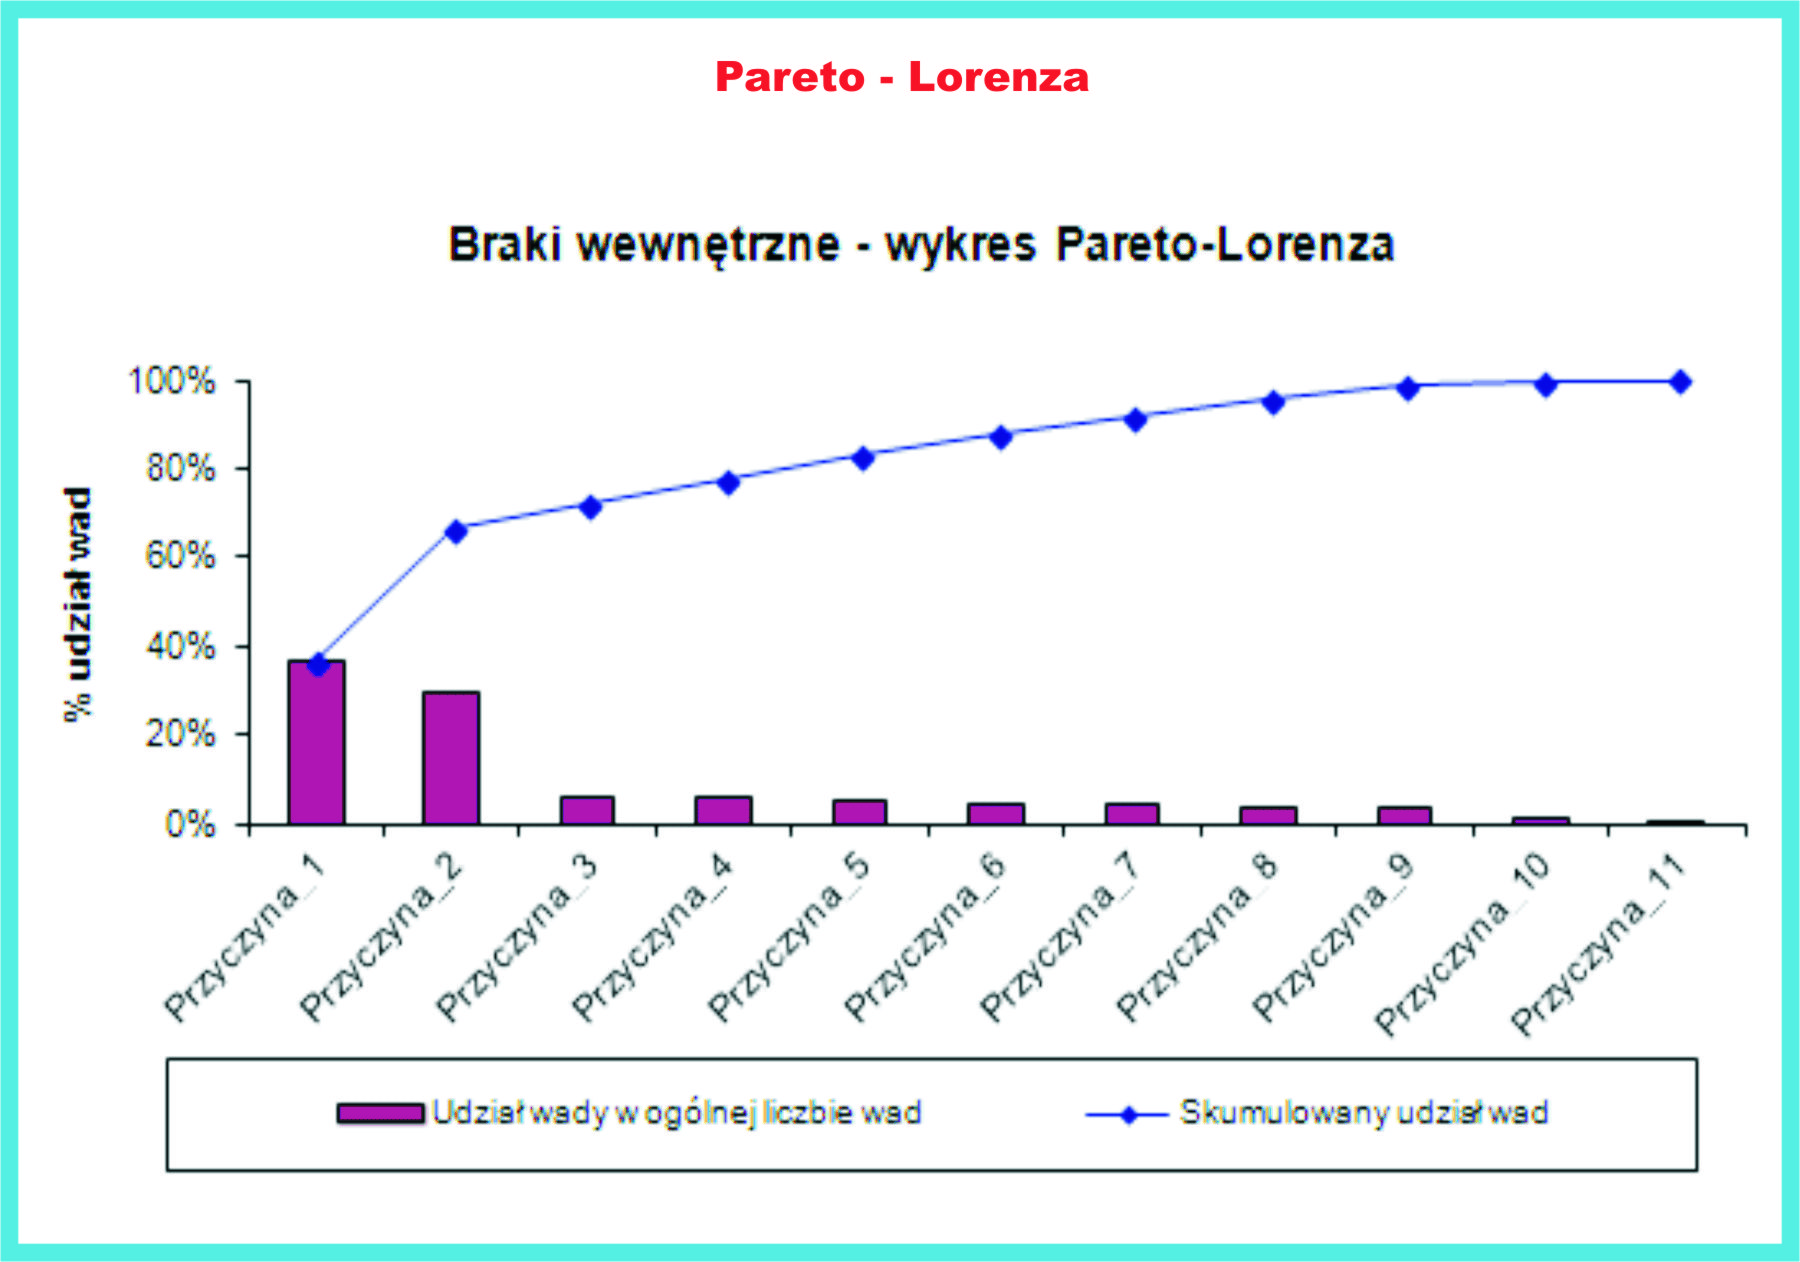 Pareto - Lorenza - Braki wewnętrzne